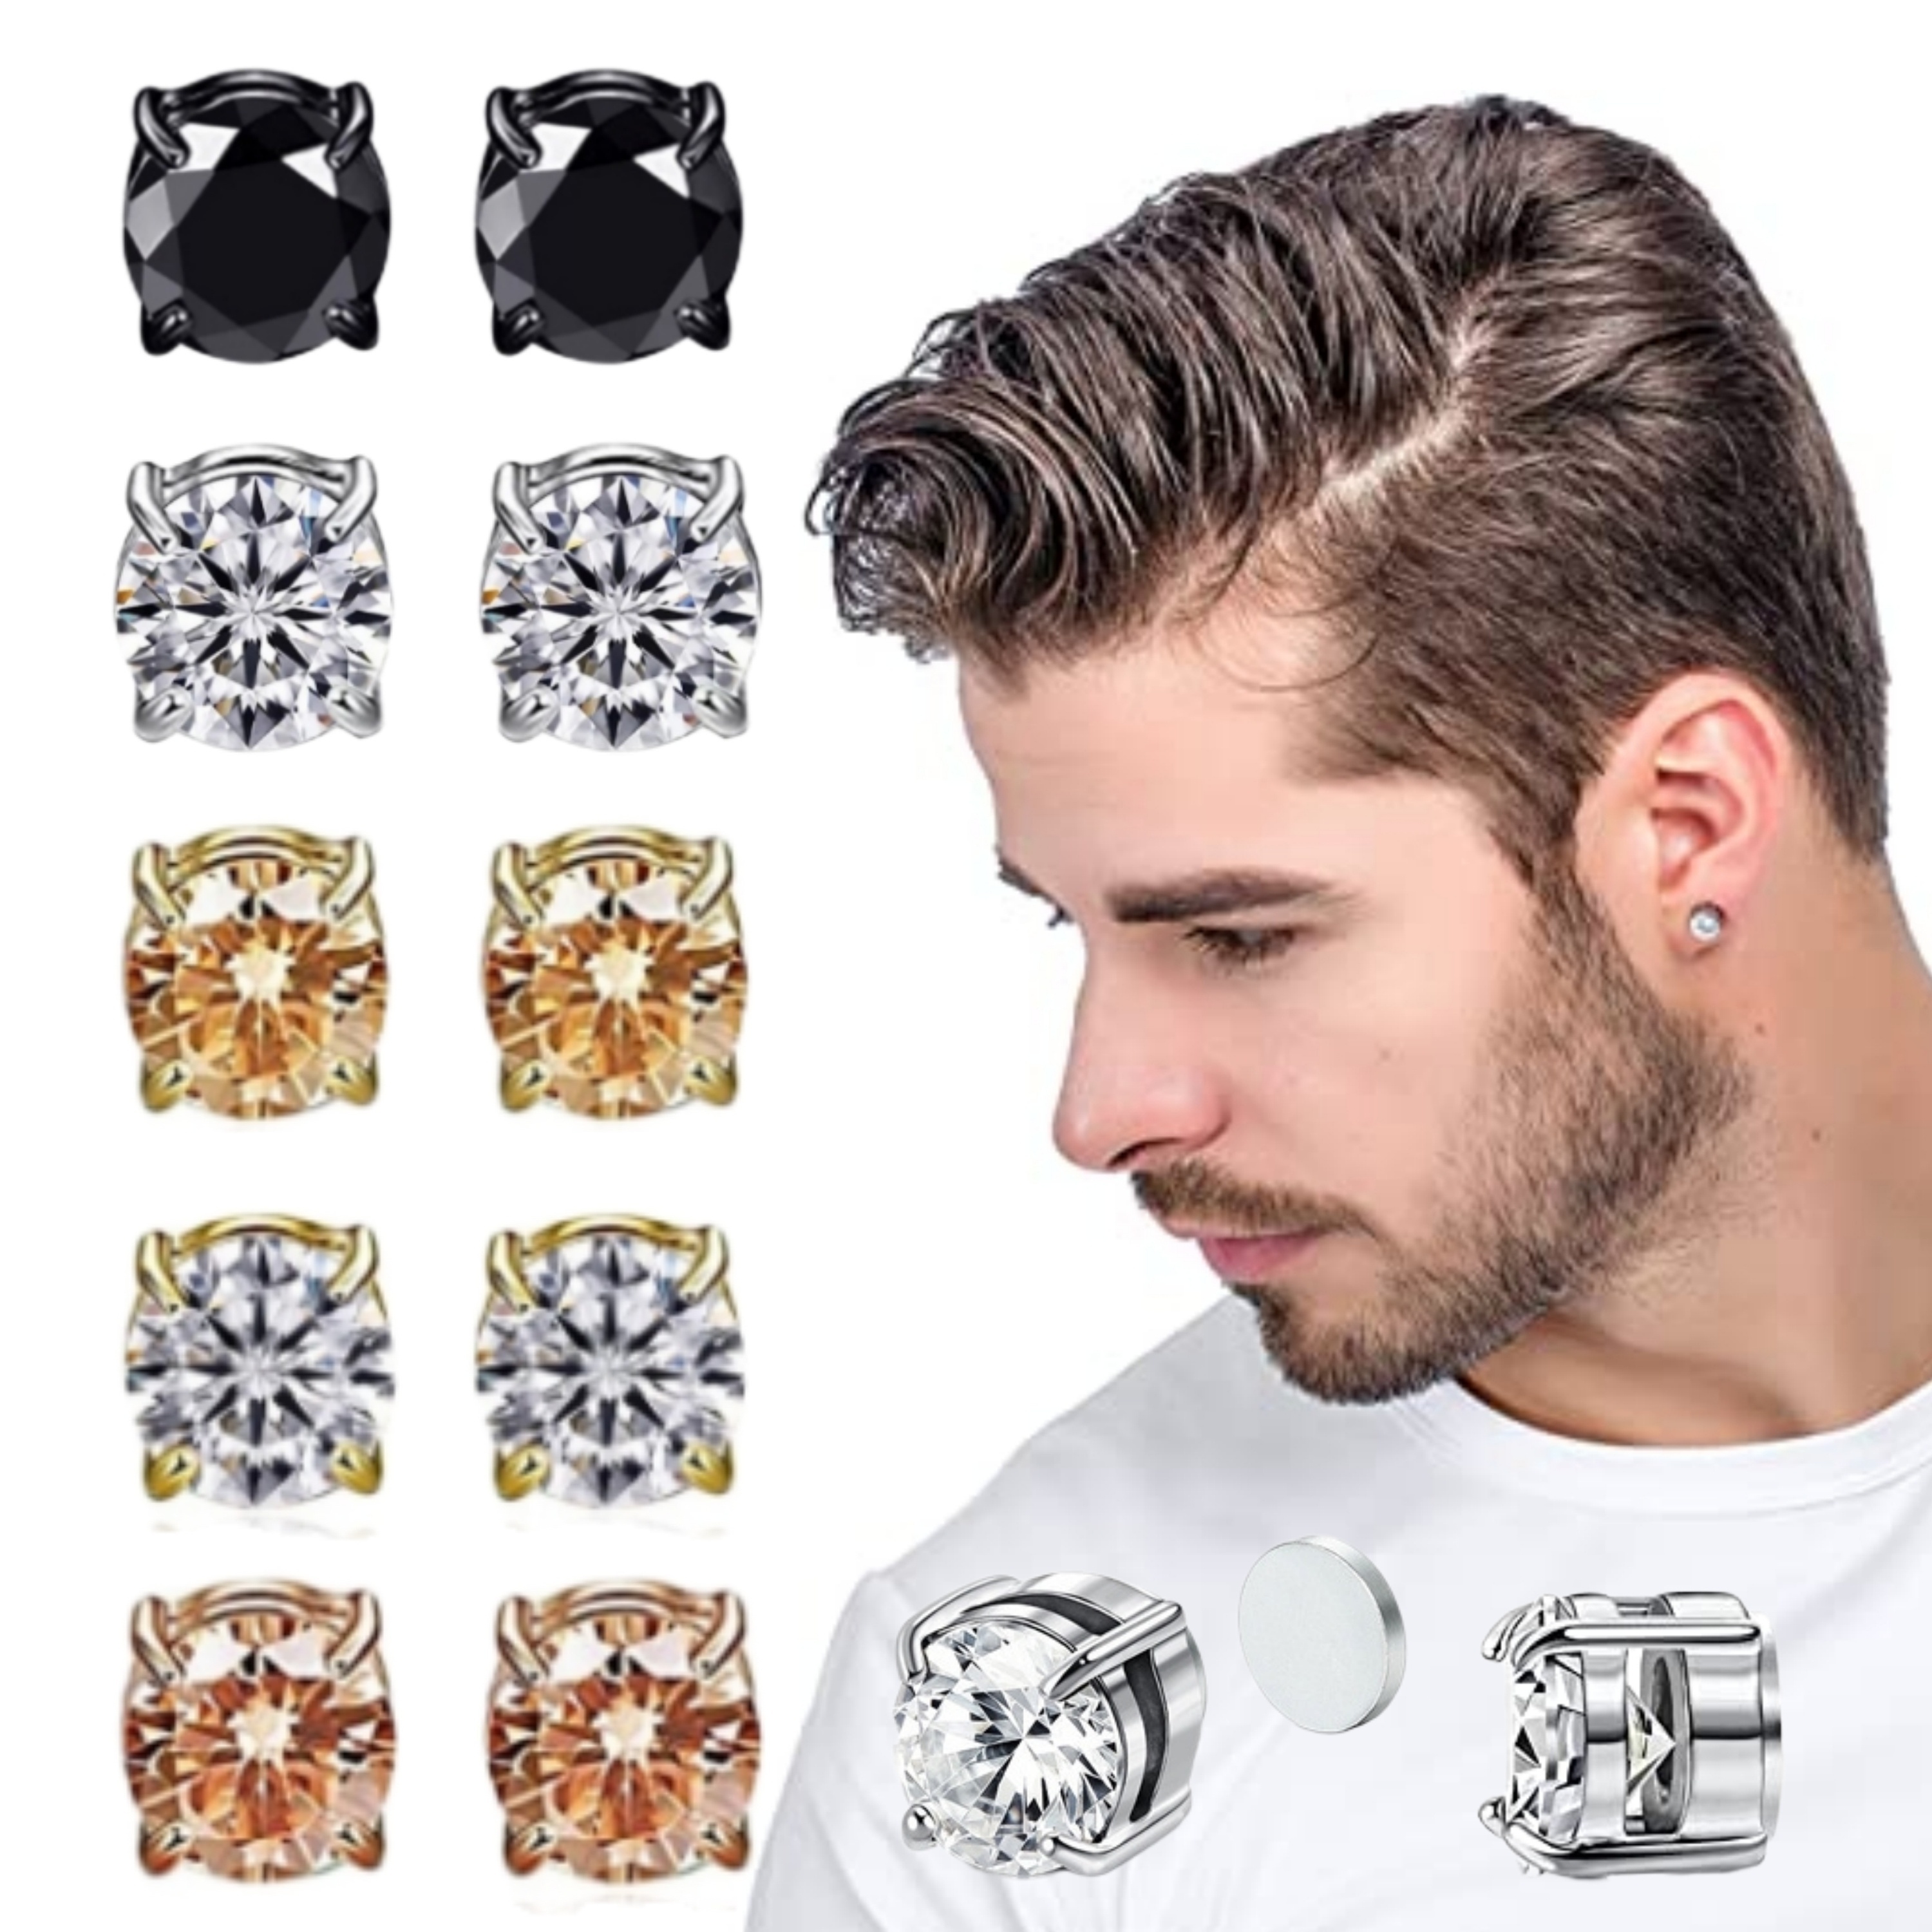 6 Pairs Clip on Earrings for Men Boys Stainless Steel Magnetic Stud Earrings Dangle Cross Non Pierced Earrings Set,one-size